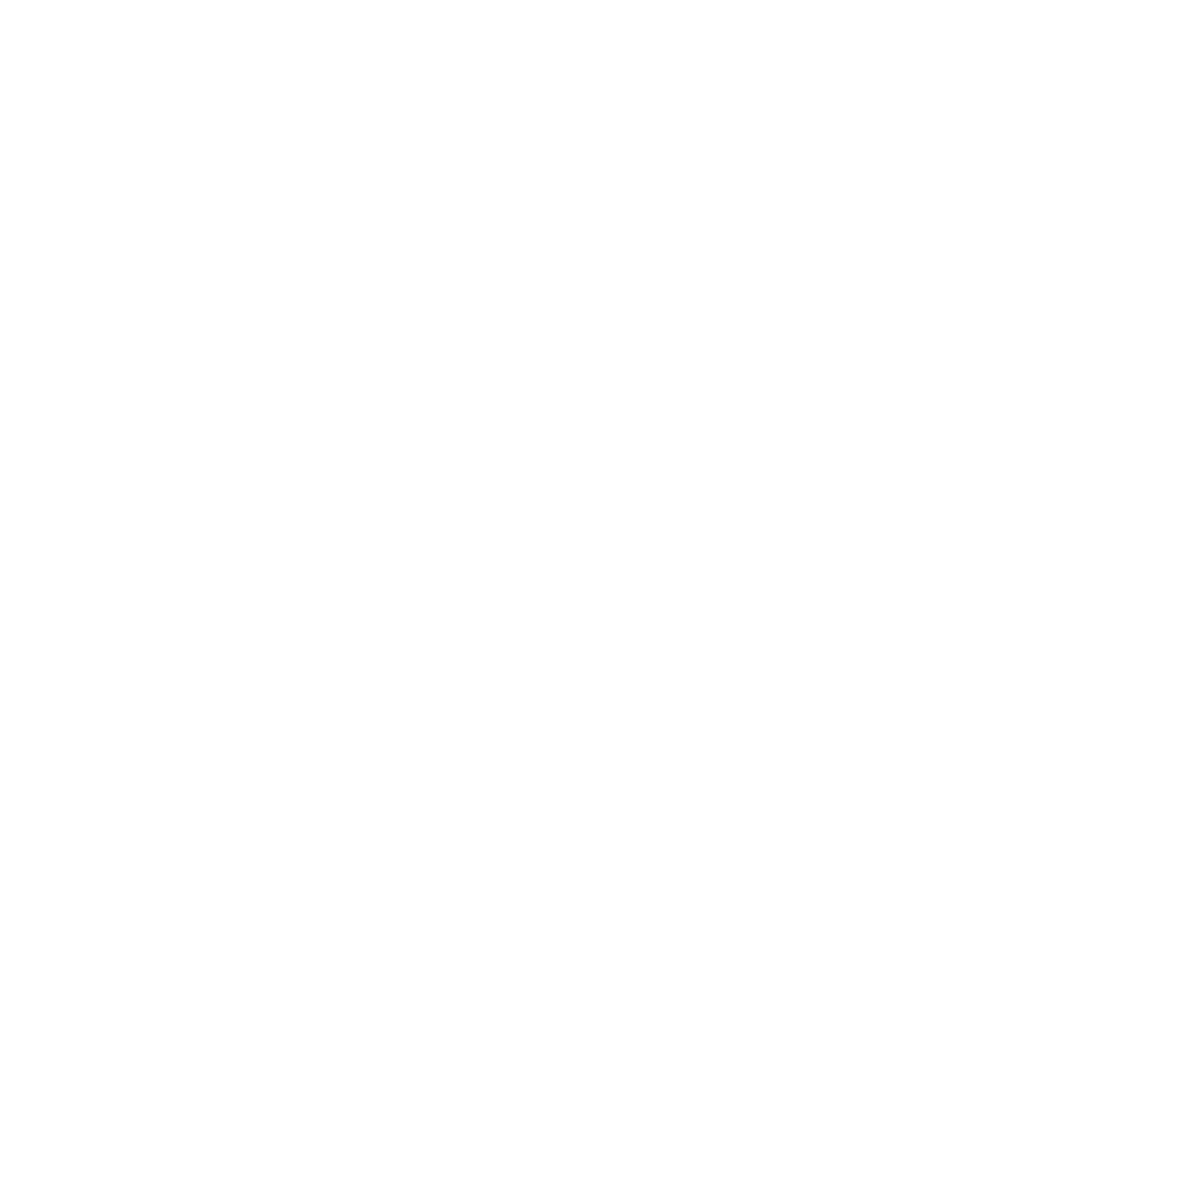 Peterson Schools